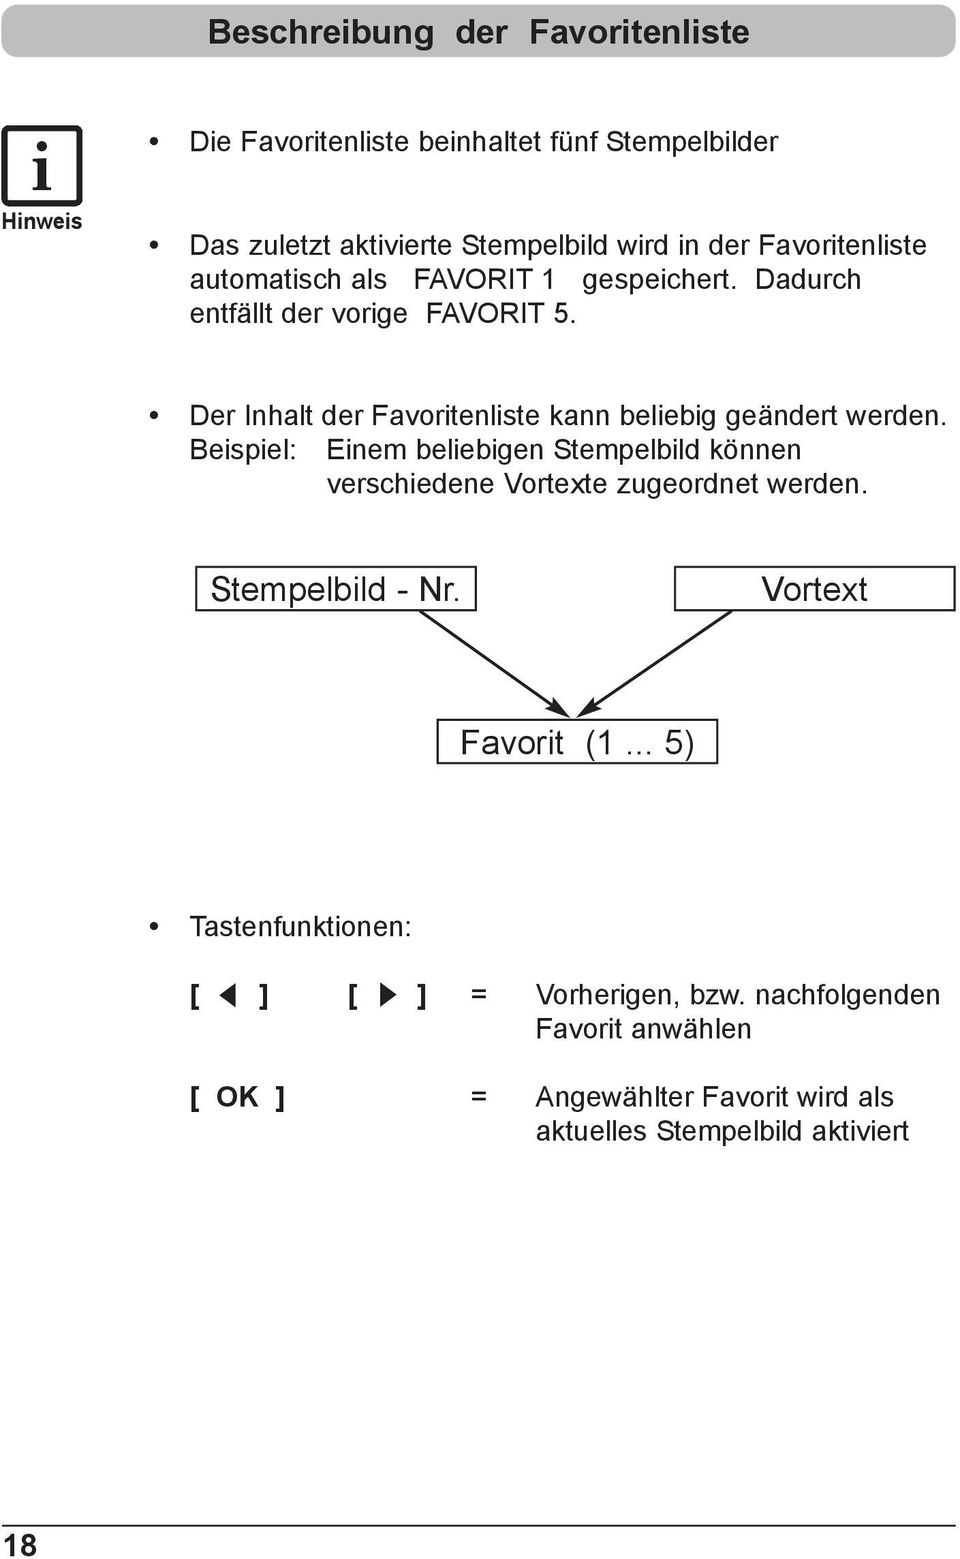 Bespel: Enem belebgen Stempelbld können verschedene Vortexte zugeordnet werden. Stempelbld - Nr. Vortext Favort (1.